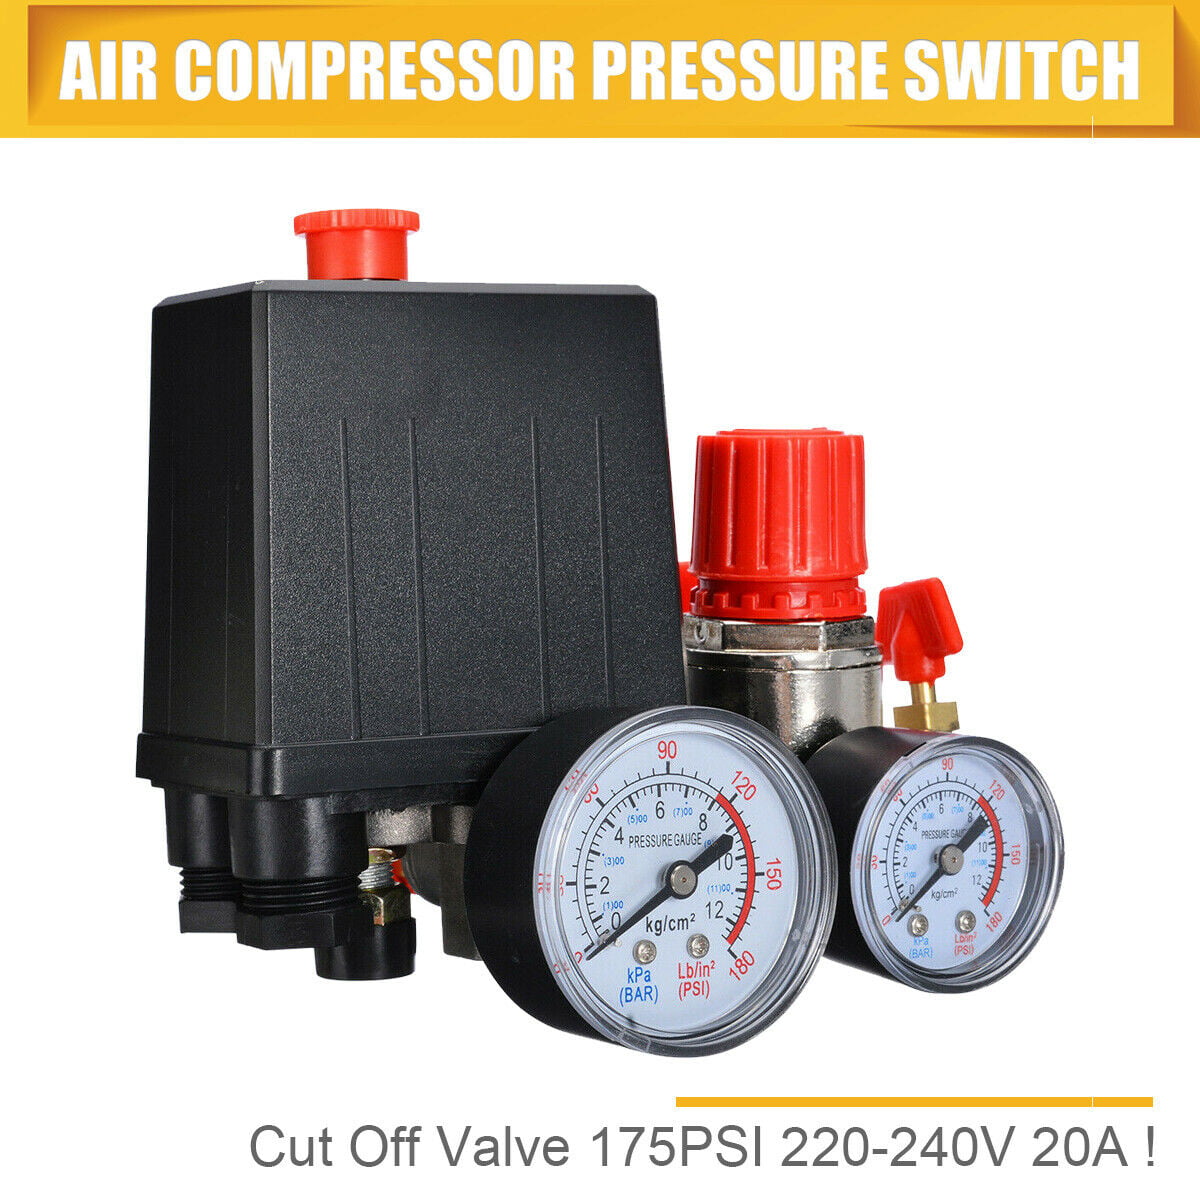 Air Compressor Pressure Control Switch Valve Manifold Regulator 175 PSI 220-240V 